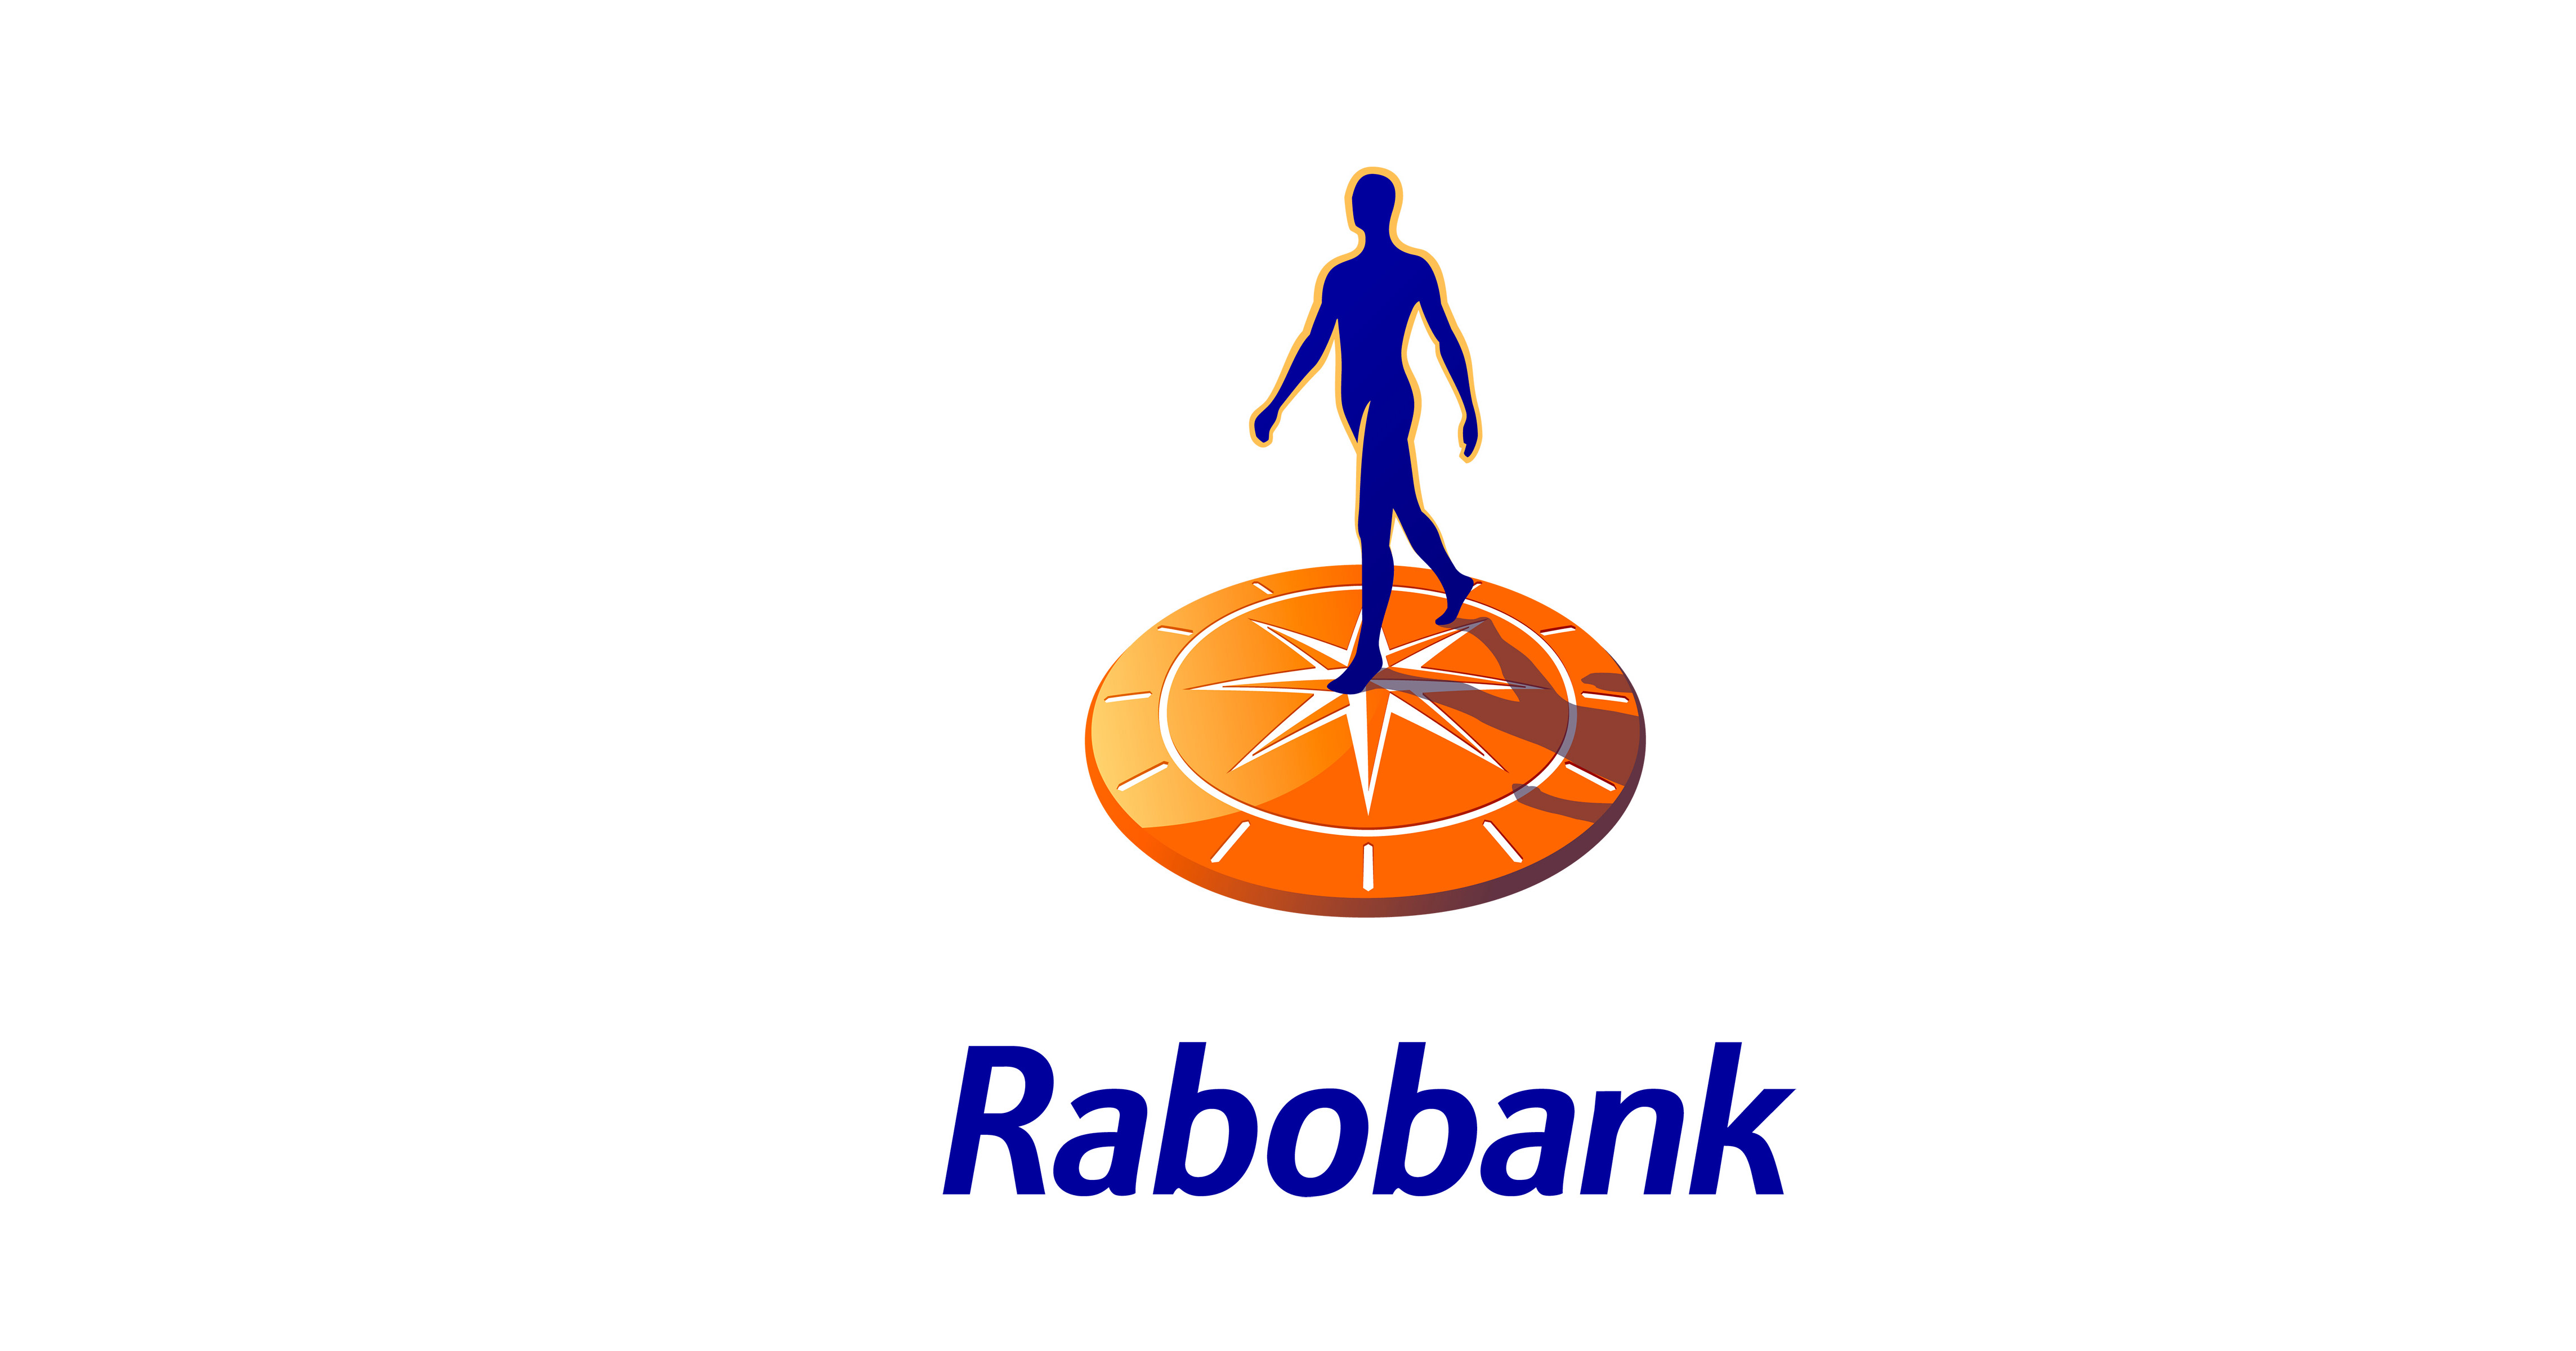 Rabobank event in Schiphol Plaza - Sonny's Inc - De Entertainmentband